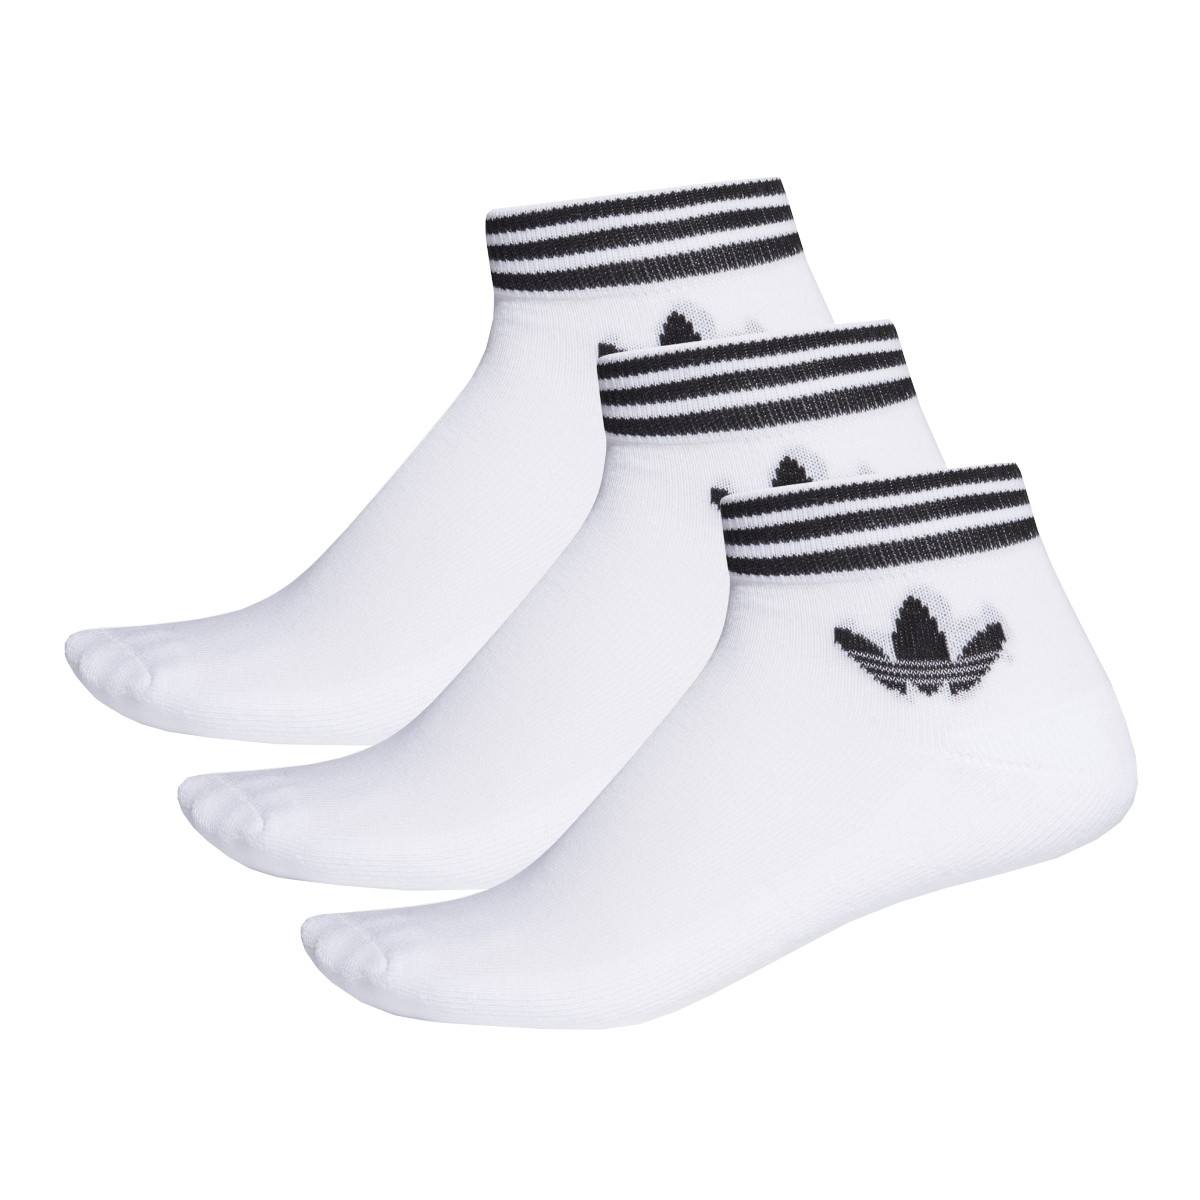 Spodní prádlo Sportovní ponožky  adidas Originals adidas Trefoil Ankle Socks 3 Pairs Bílá